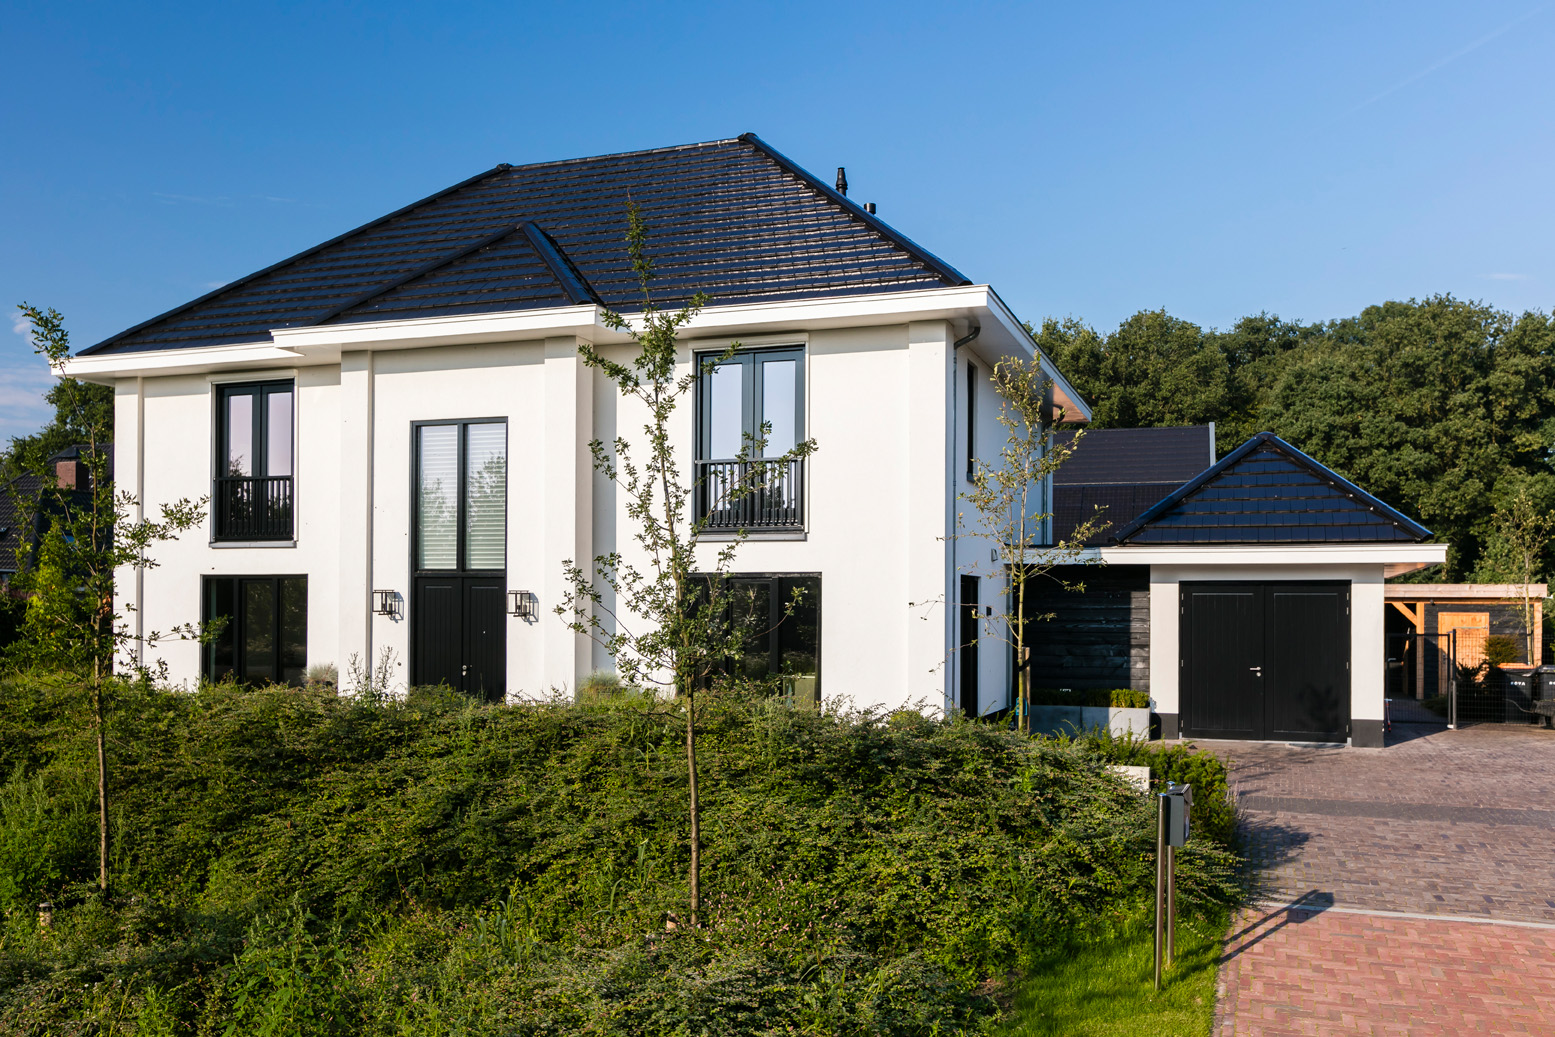 Foto: Woning bouwen   Huis bouwen   Villa Lindepijlstaart te Zwolle   Architectuurwonen 5